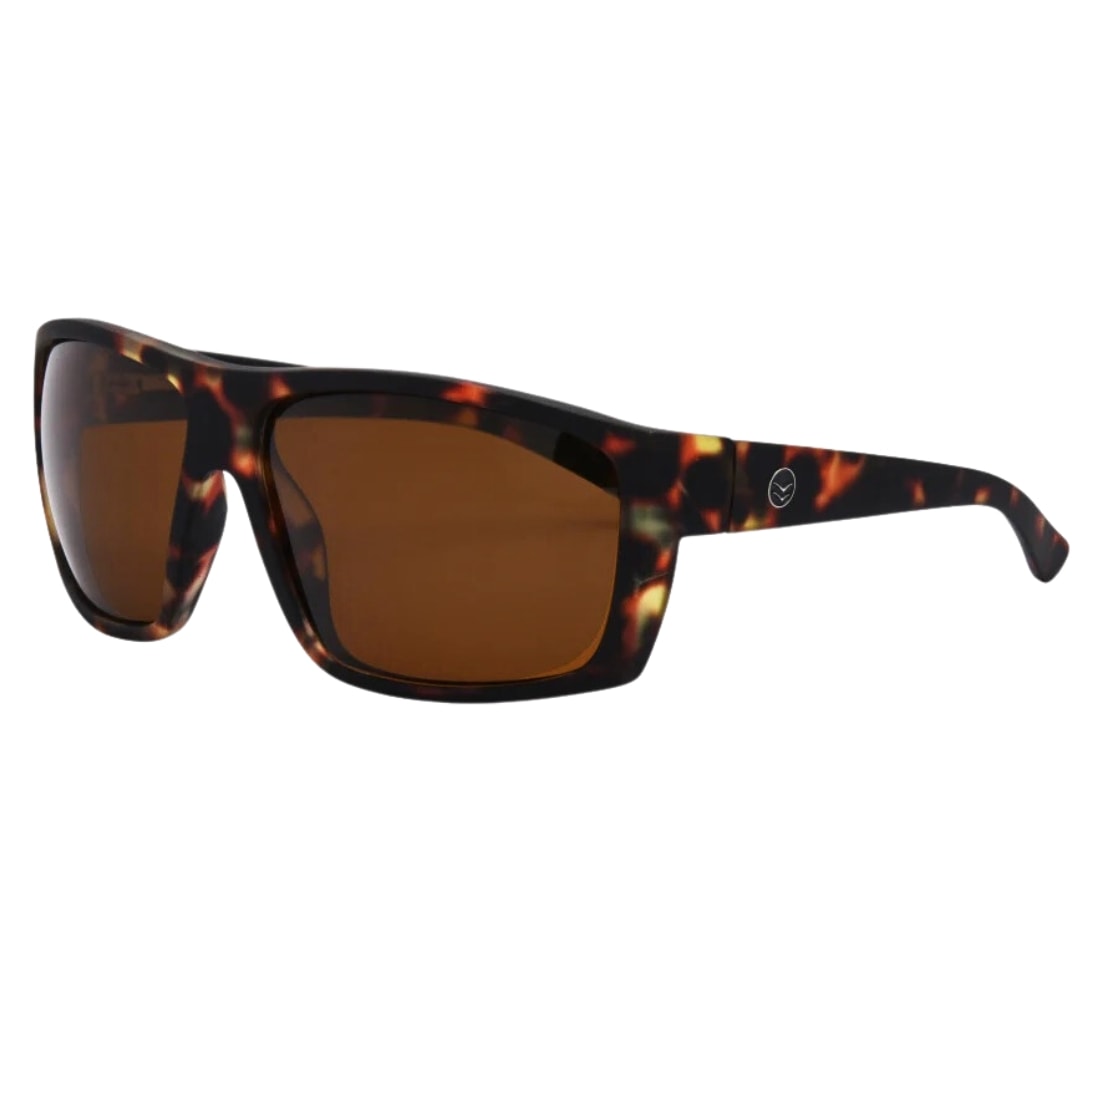 I-Sea Shipwrecks Polarised Sunglasses - Tort/Brown Polarized - Square/Rectangular Sunglasses by I-Sea